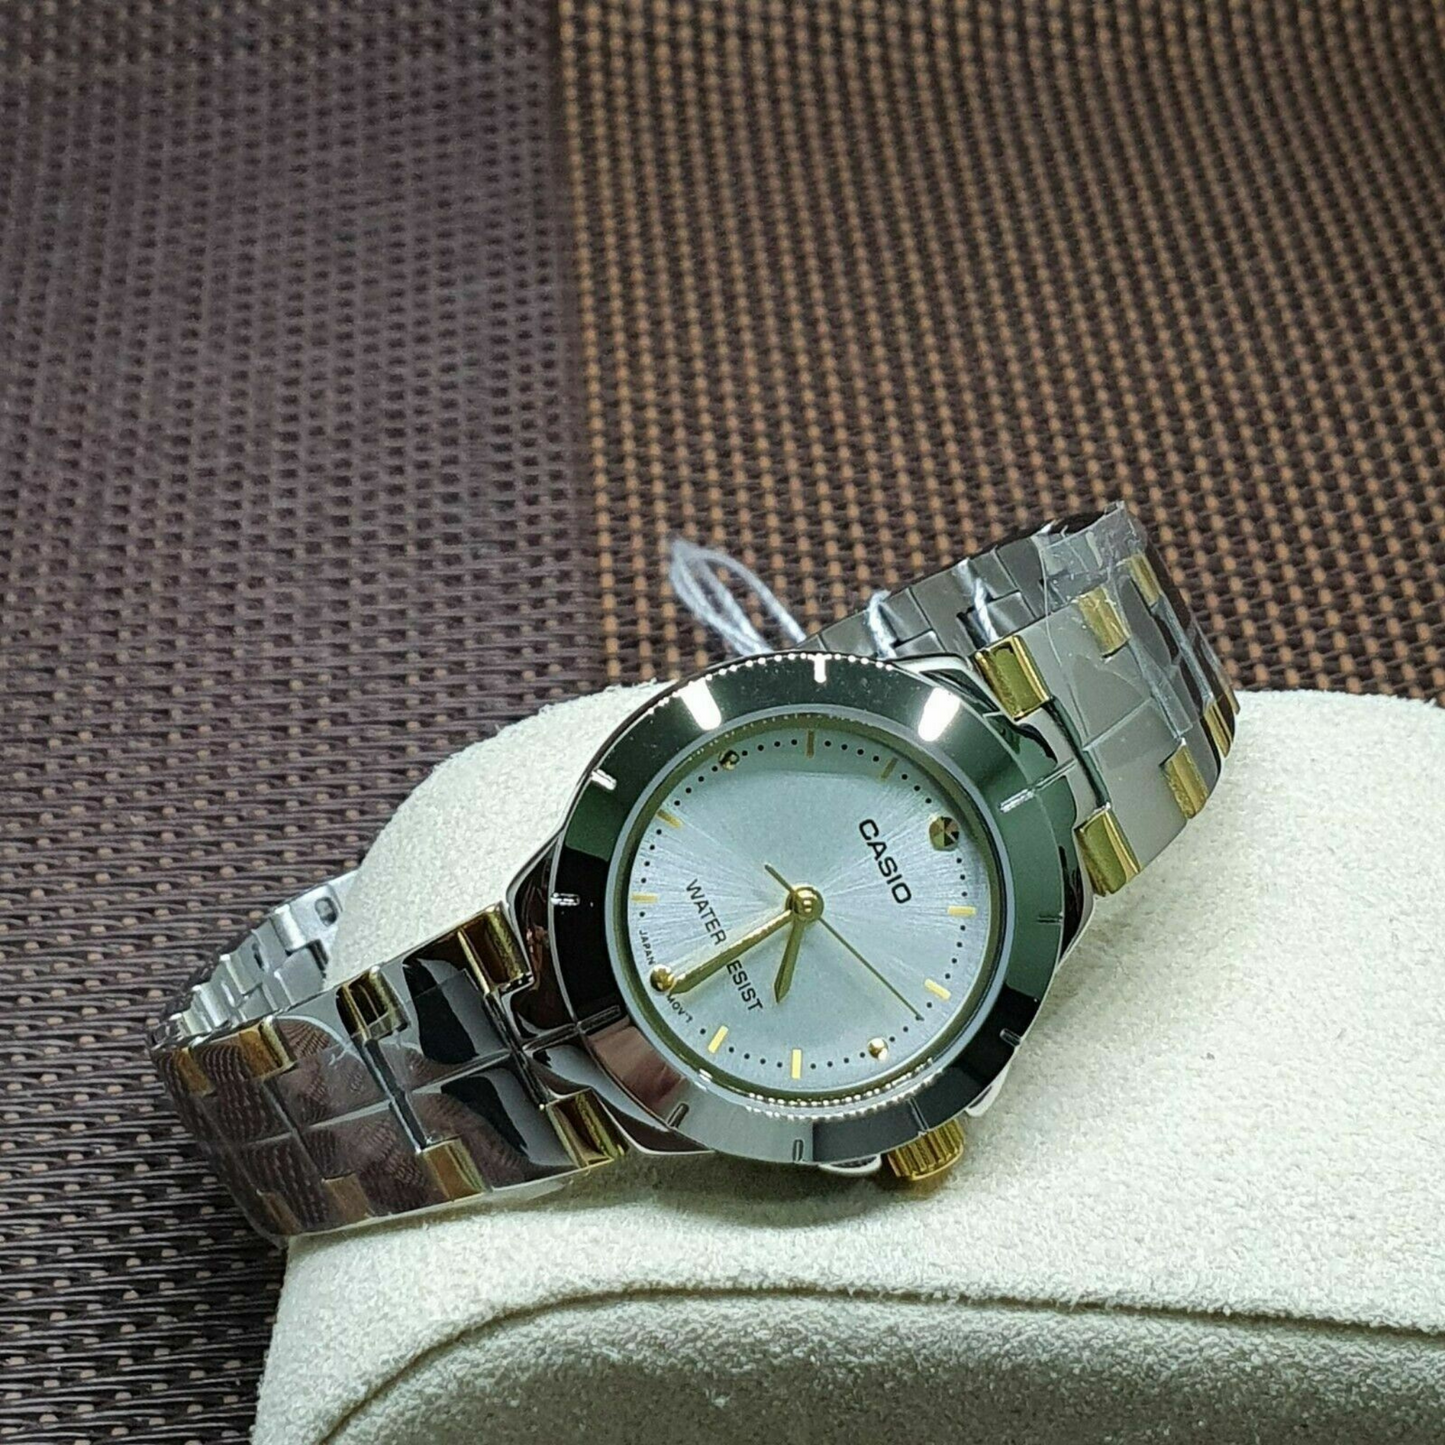 Reloj Casio mujer Modelo LTP-1242SG-7C